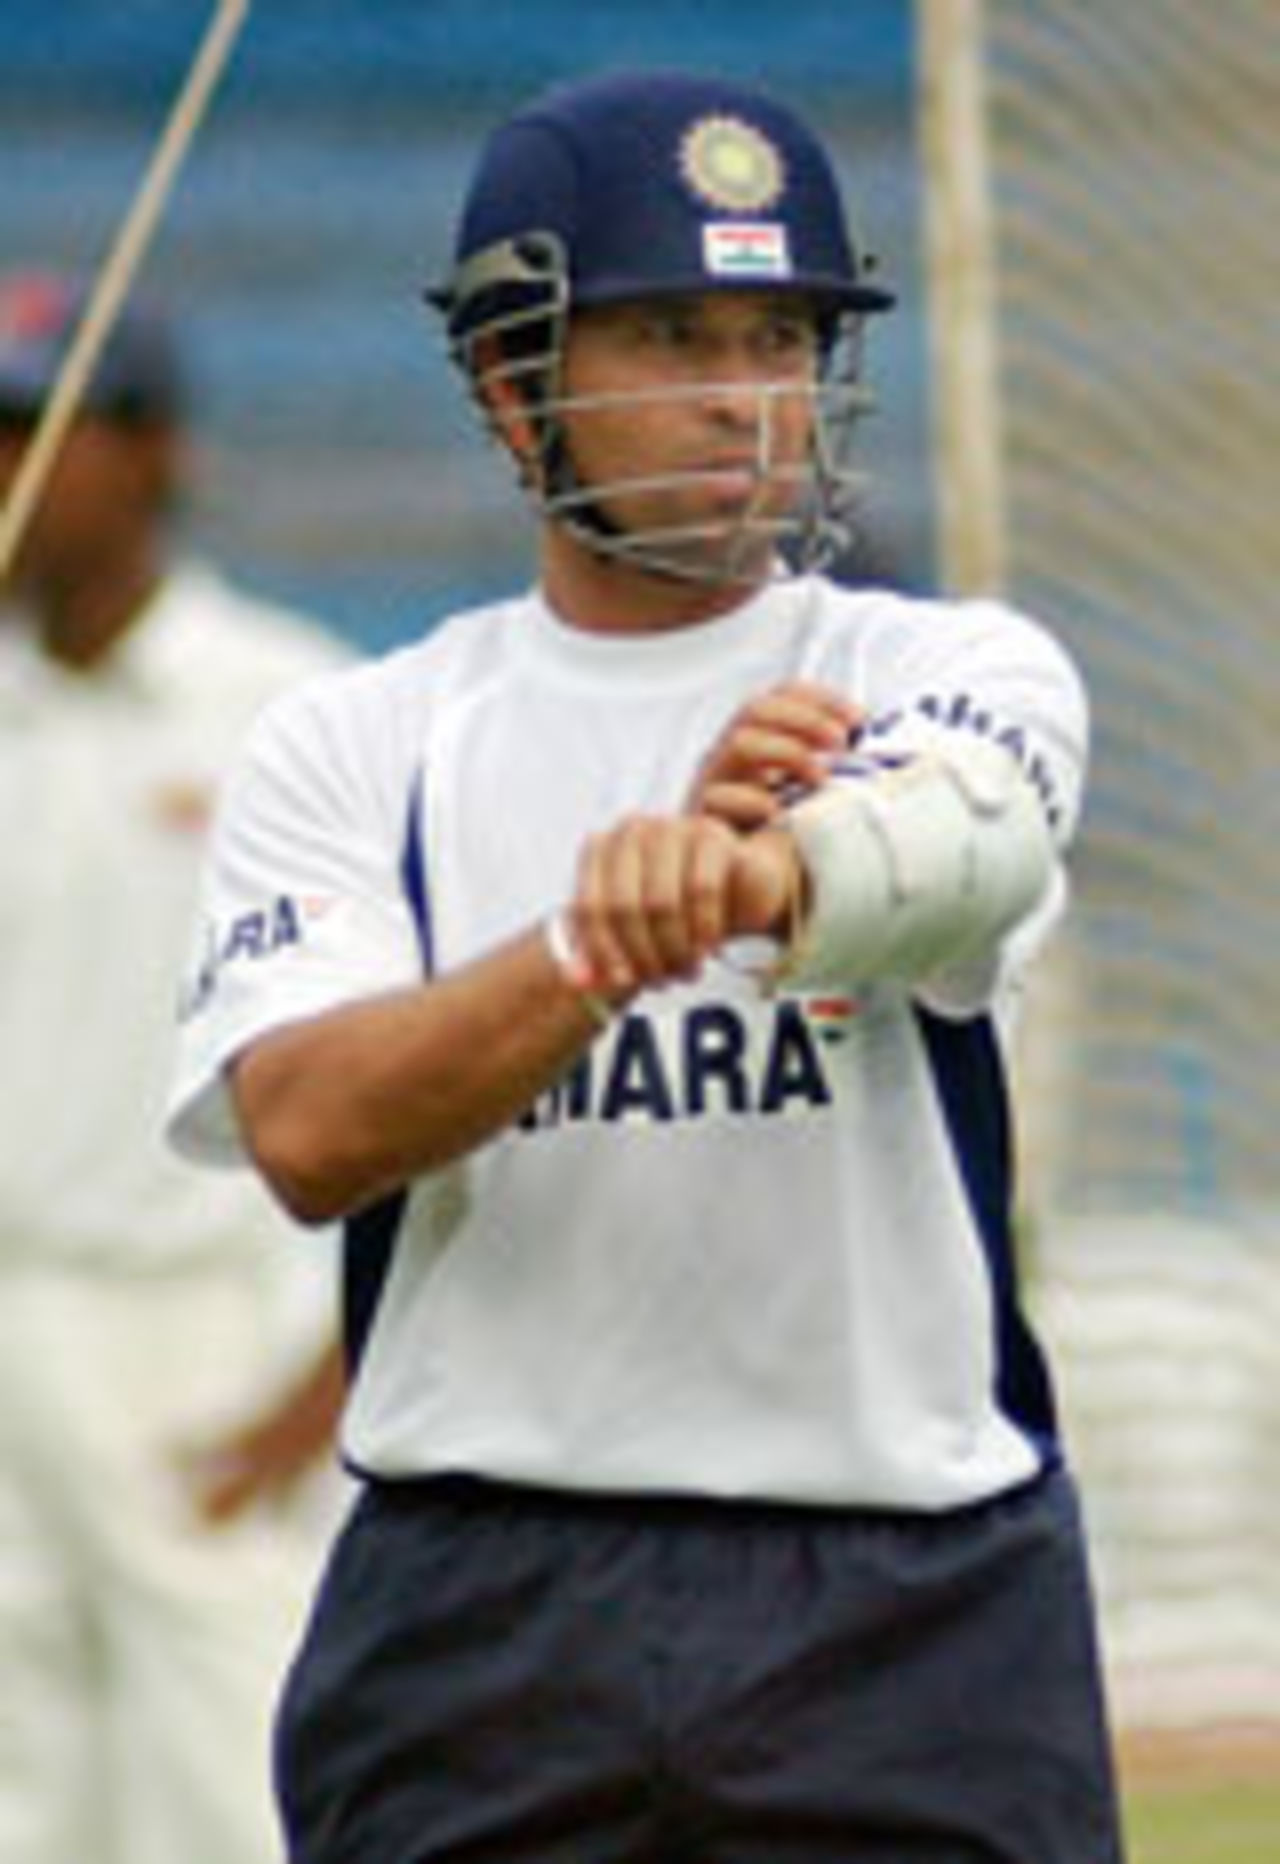 Sachin Tendulkar putting on his arm guard at practice before the fourth Test in Mumbai, November 2 2004